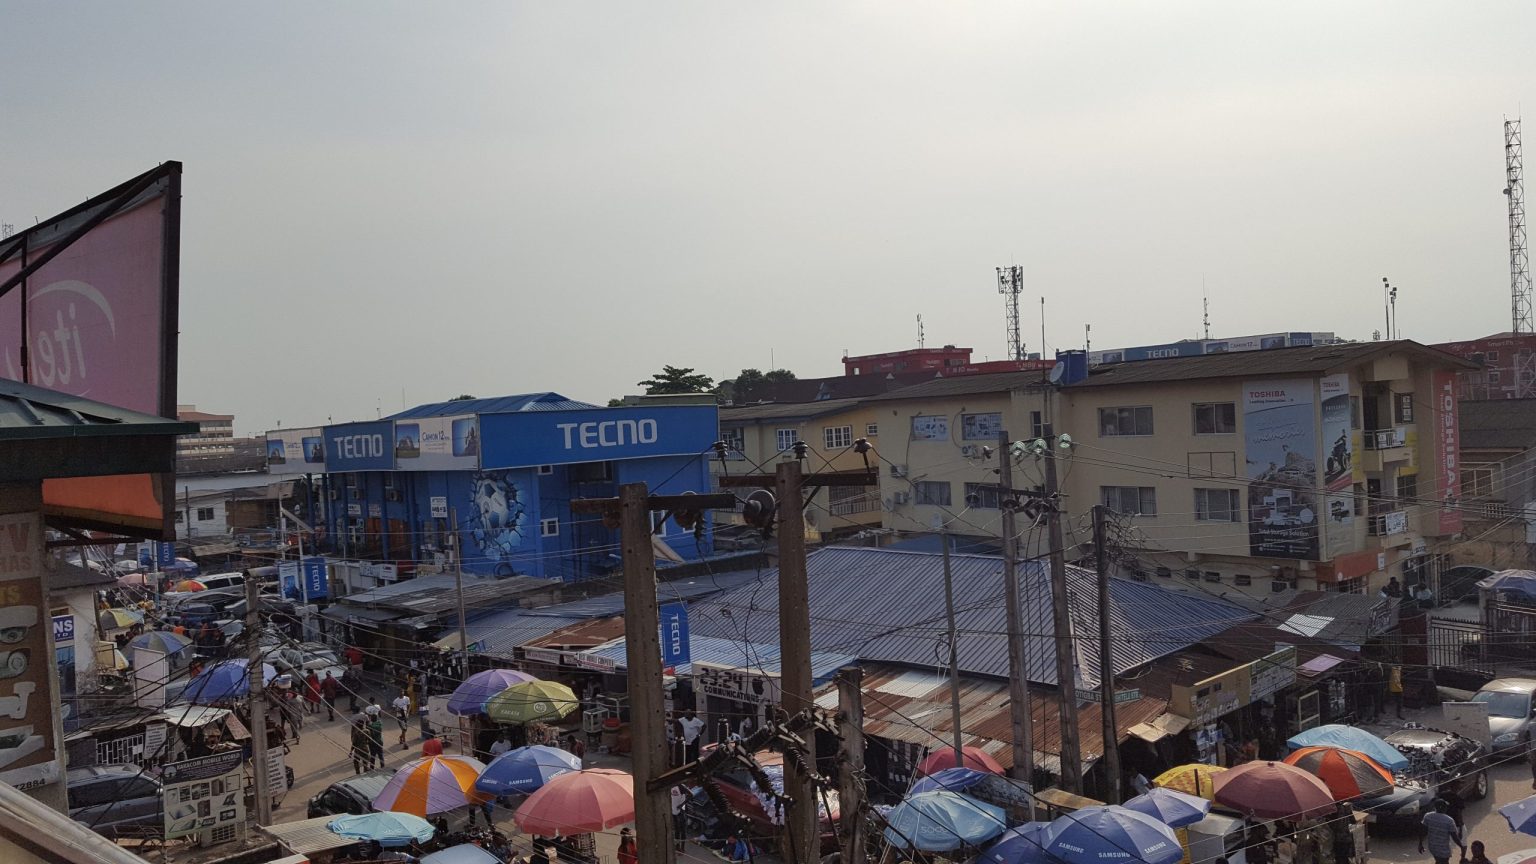 Computer Village electronics market in Lagos, Nigeria. Photo by Jeremy Kirshbaum.